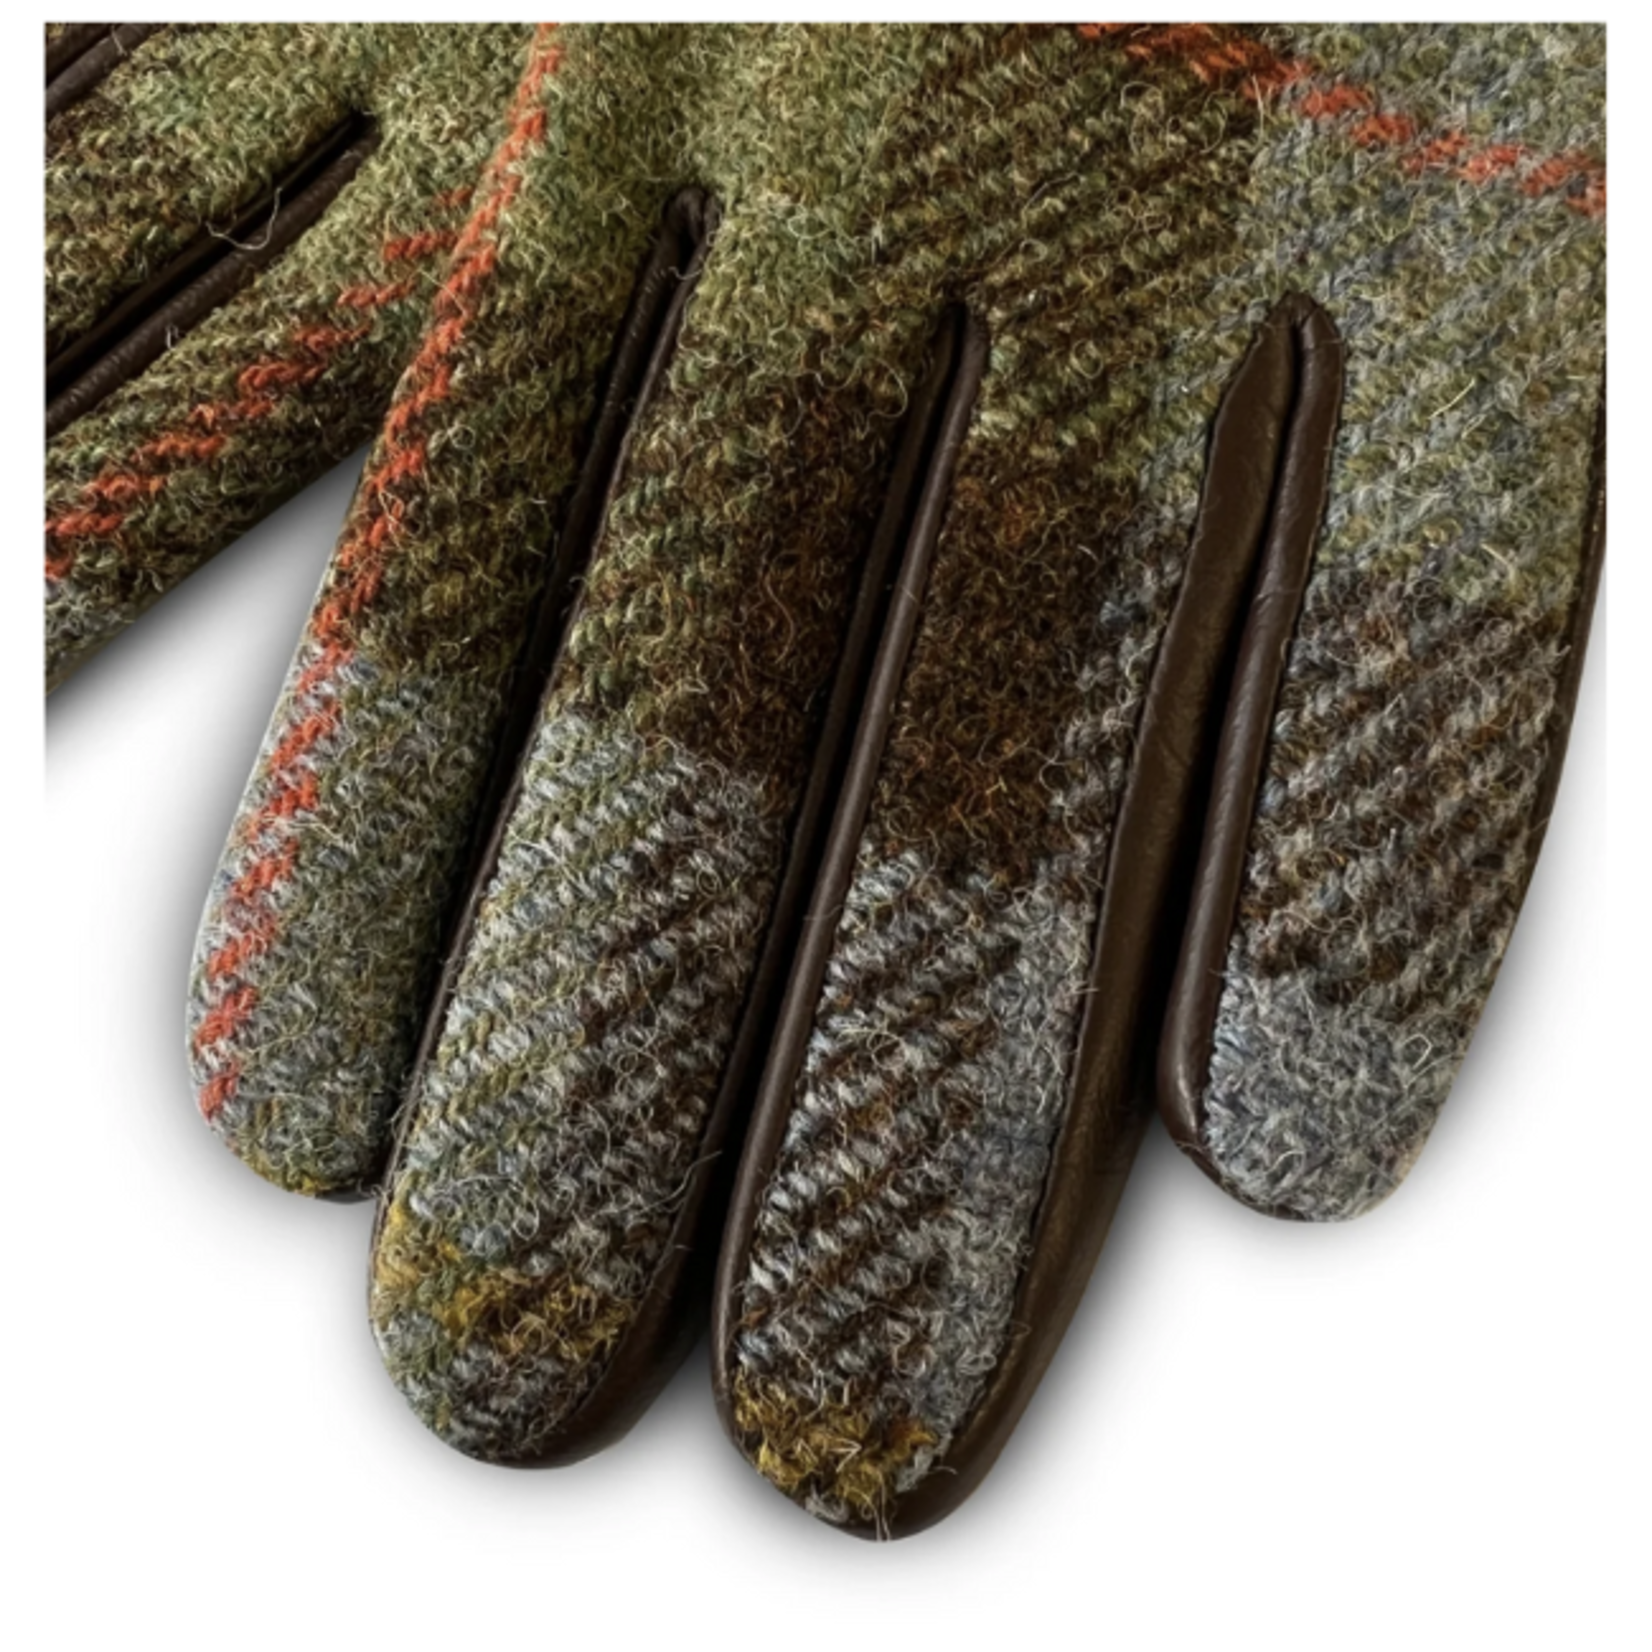 Islander Womens Tweed & Leather Gloves: Blue Chestnut